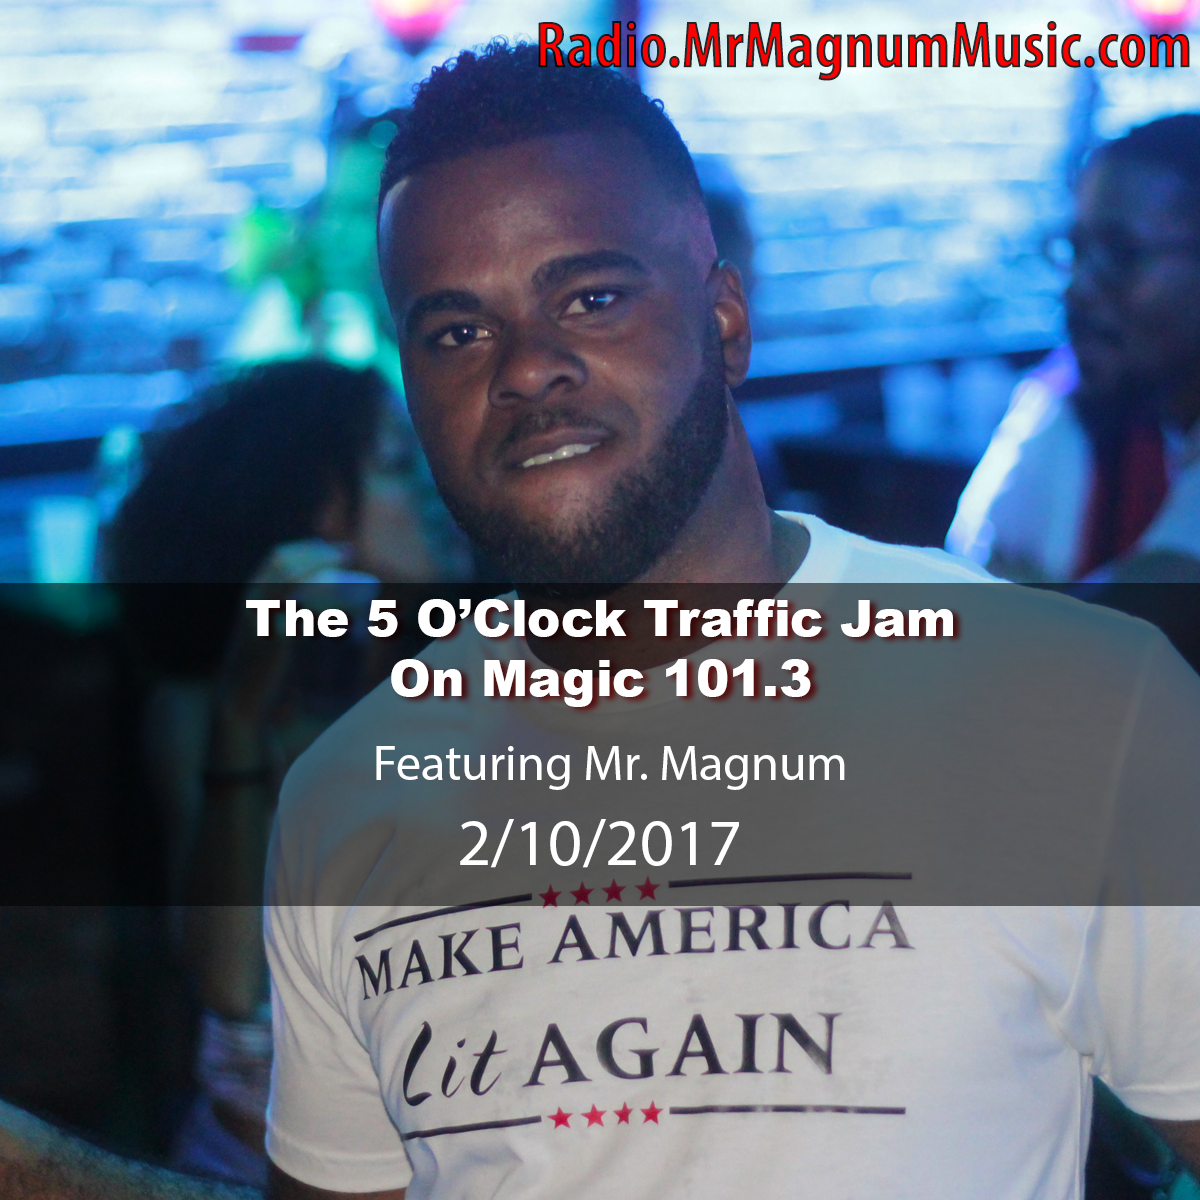 The 5 O'Clock Traffic Jam 2/10/2017